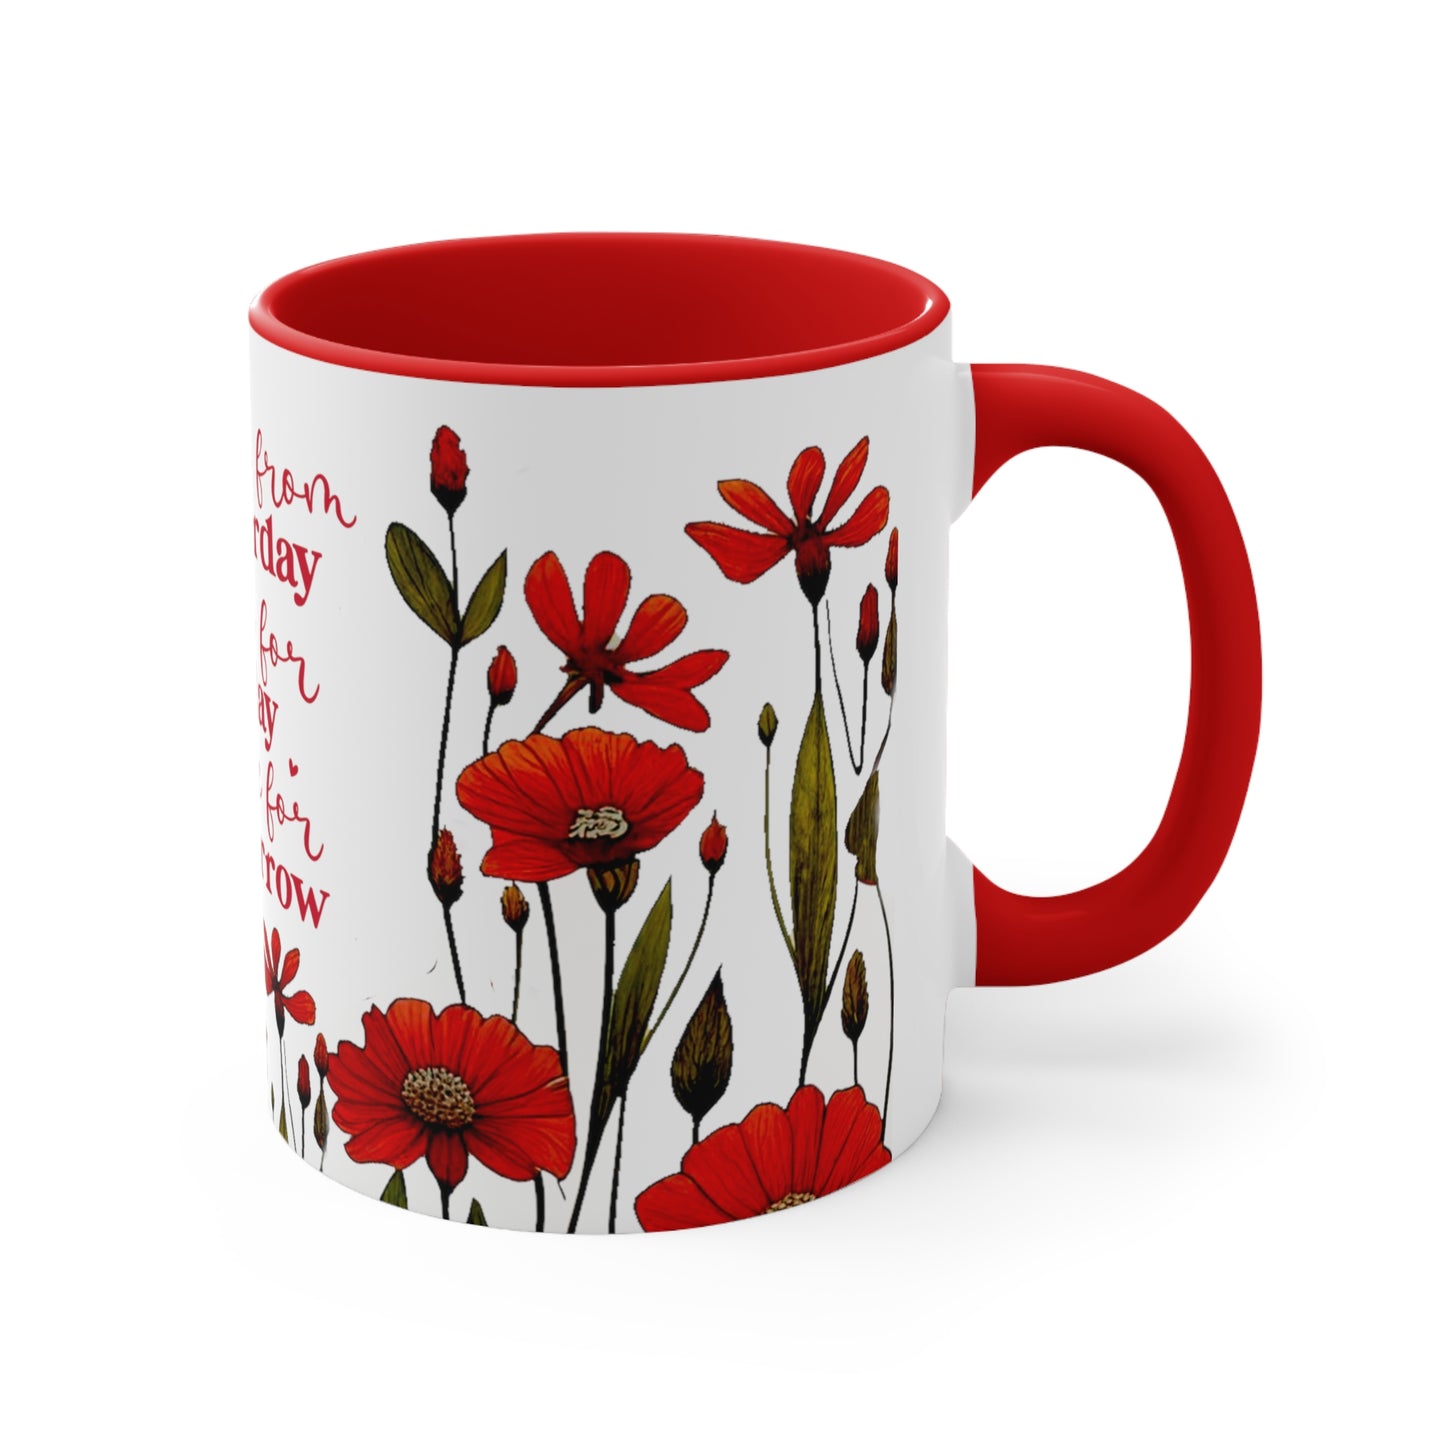 OOI-Red Accent Coffee Mug, 11oz Affirmation